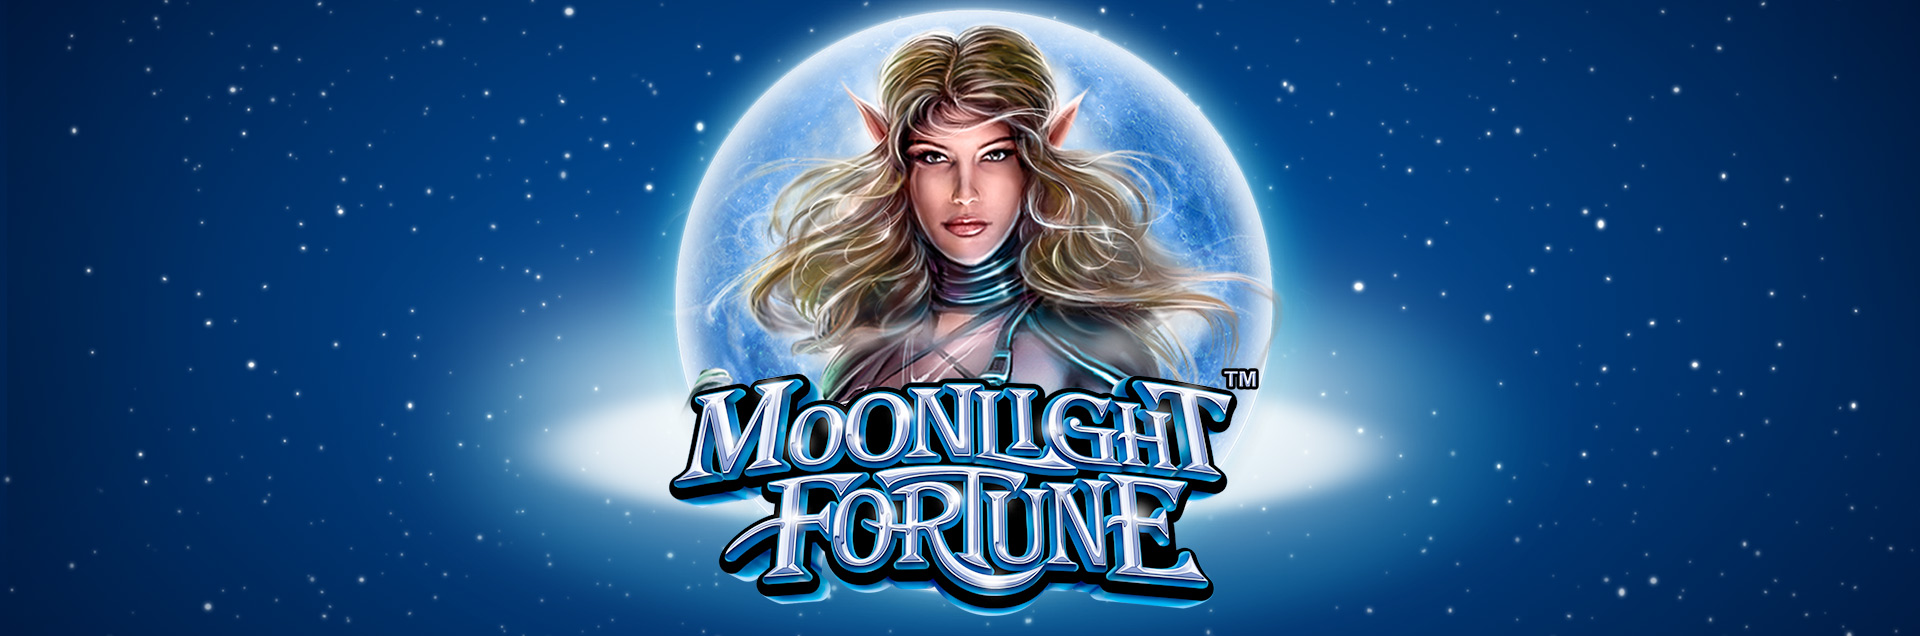 MoonlightFortune logo